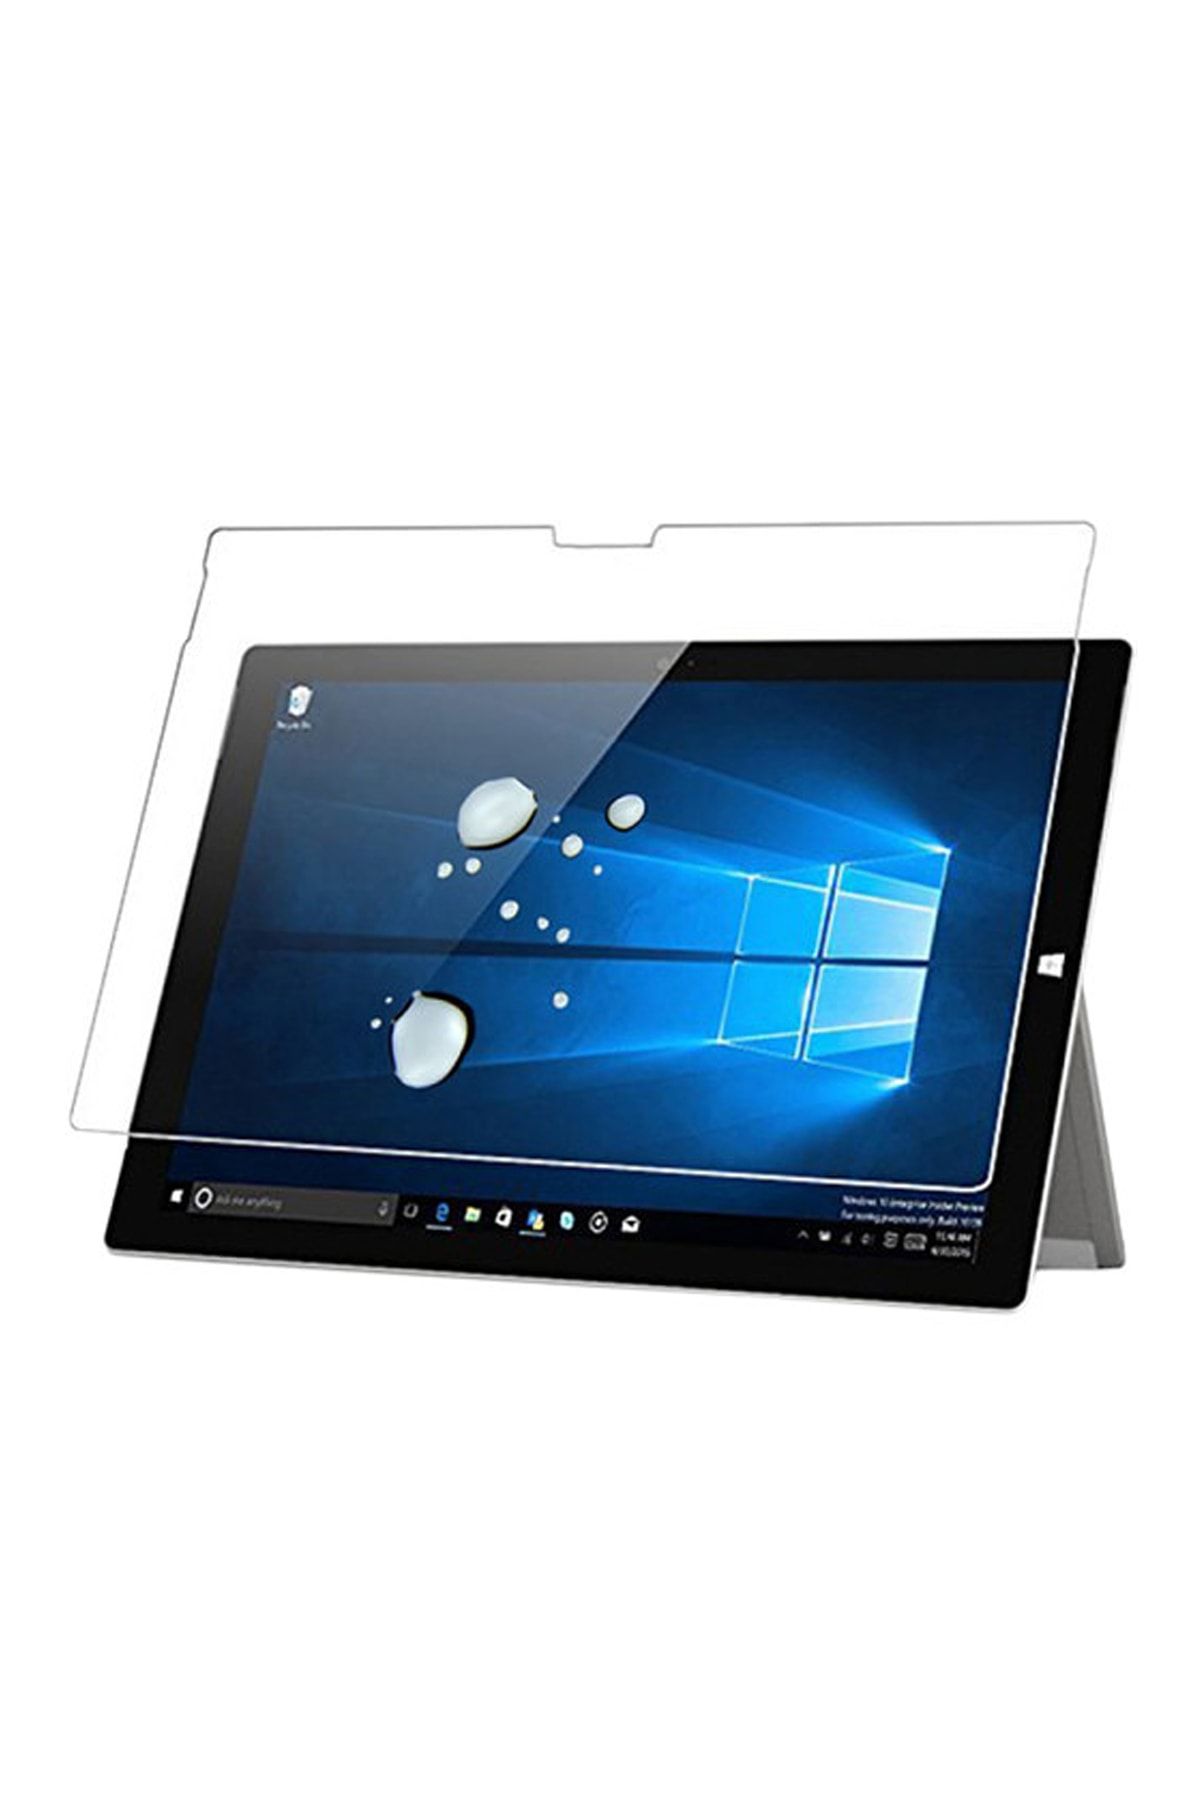 Microcase Microsoft Surface Pro 5 Uyumlu Ekran Koruyucu Film 1 Adet